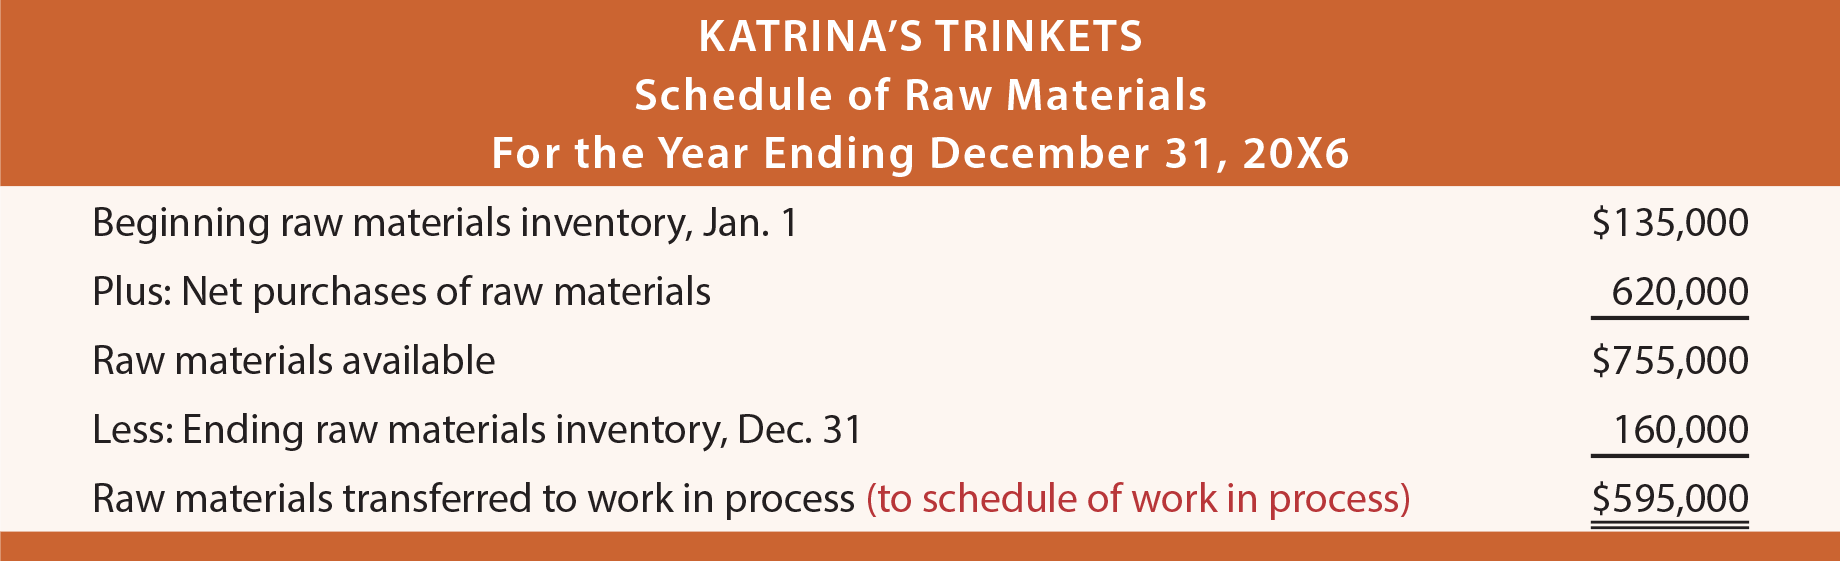 Schedule of Raw Materials